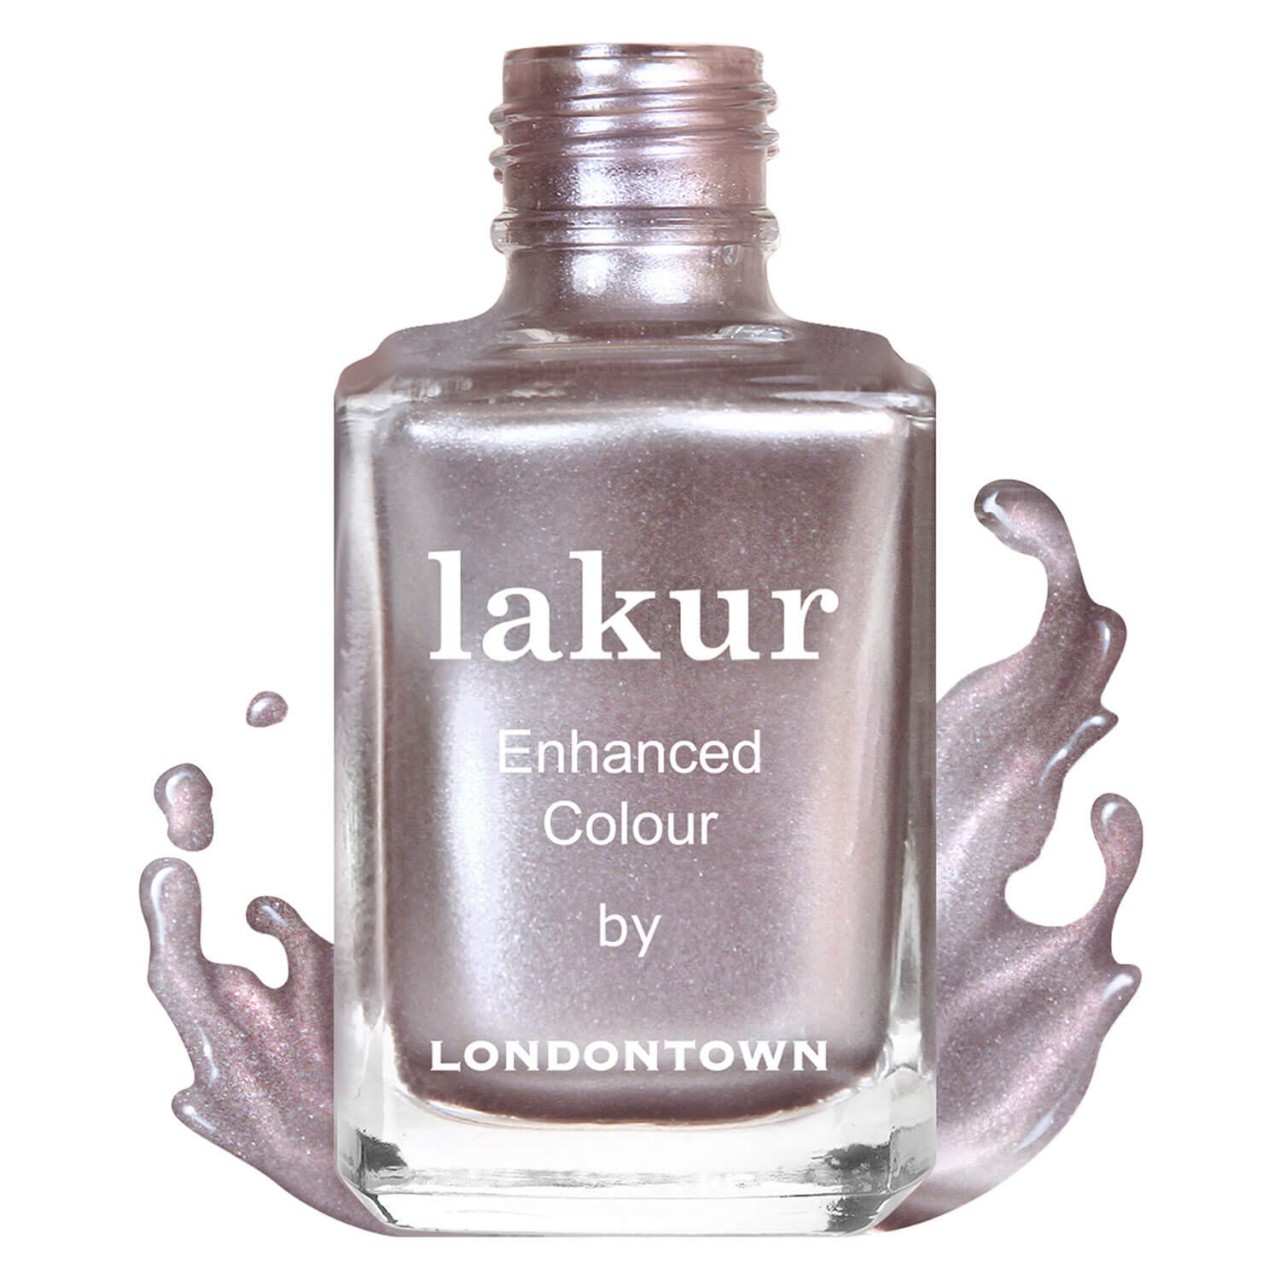 lakur - BRILL-ant von Londontown